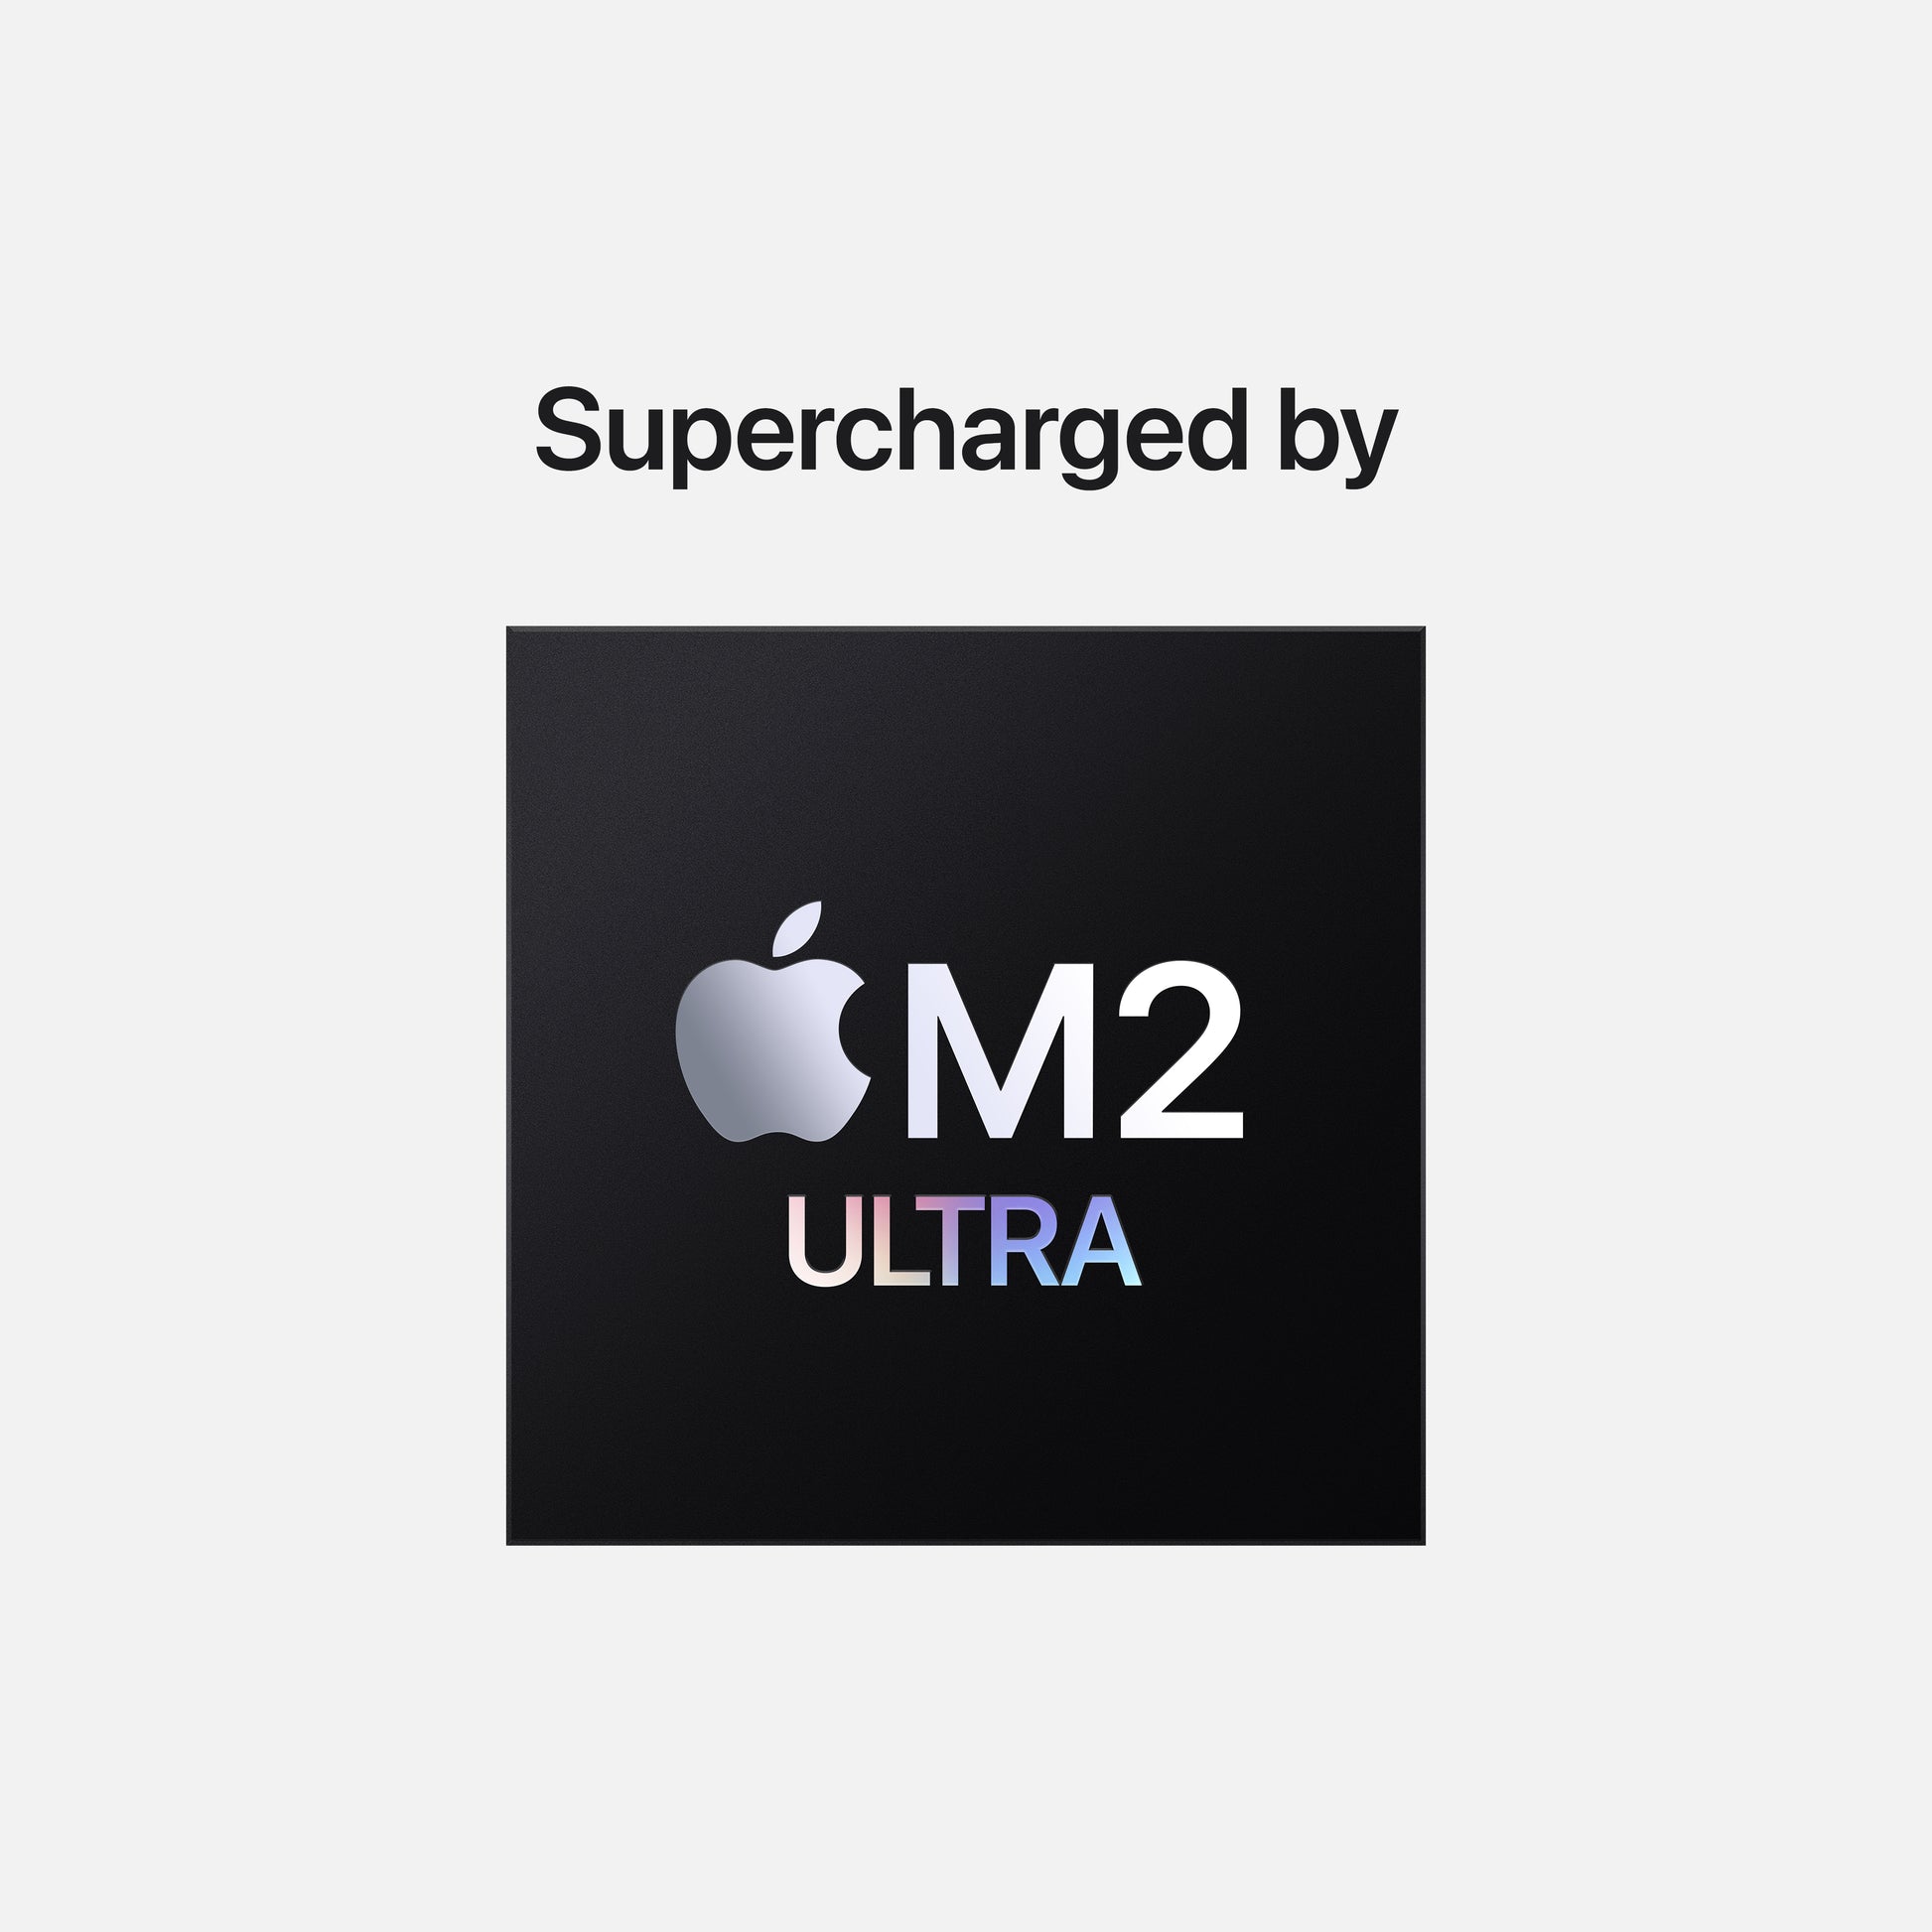 Mac Studio with M2 – Expercom